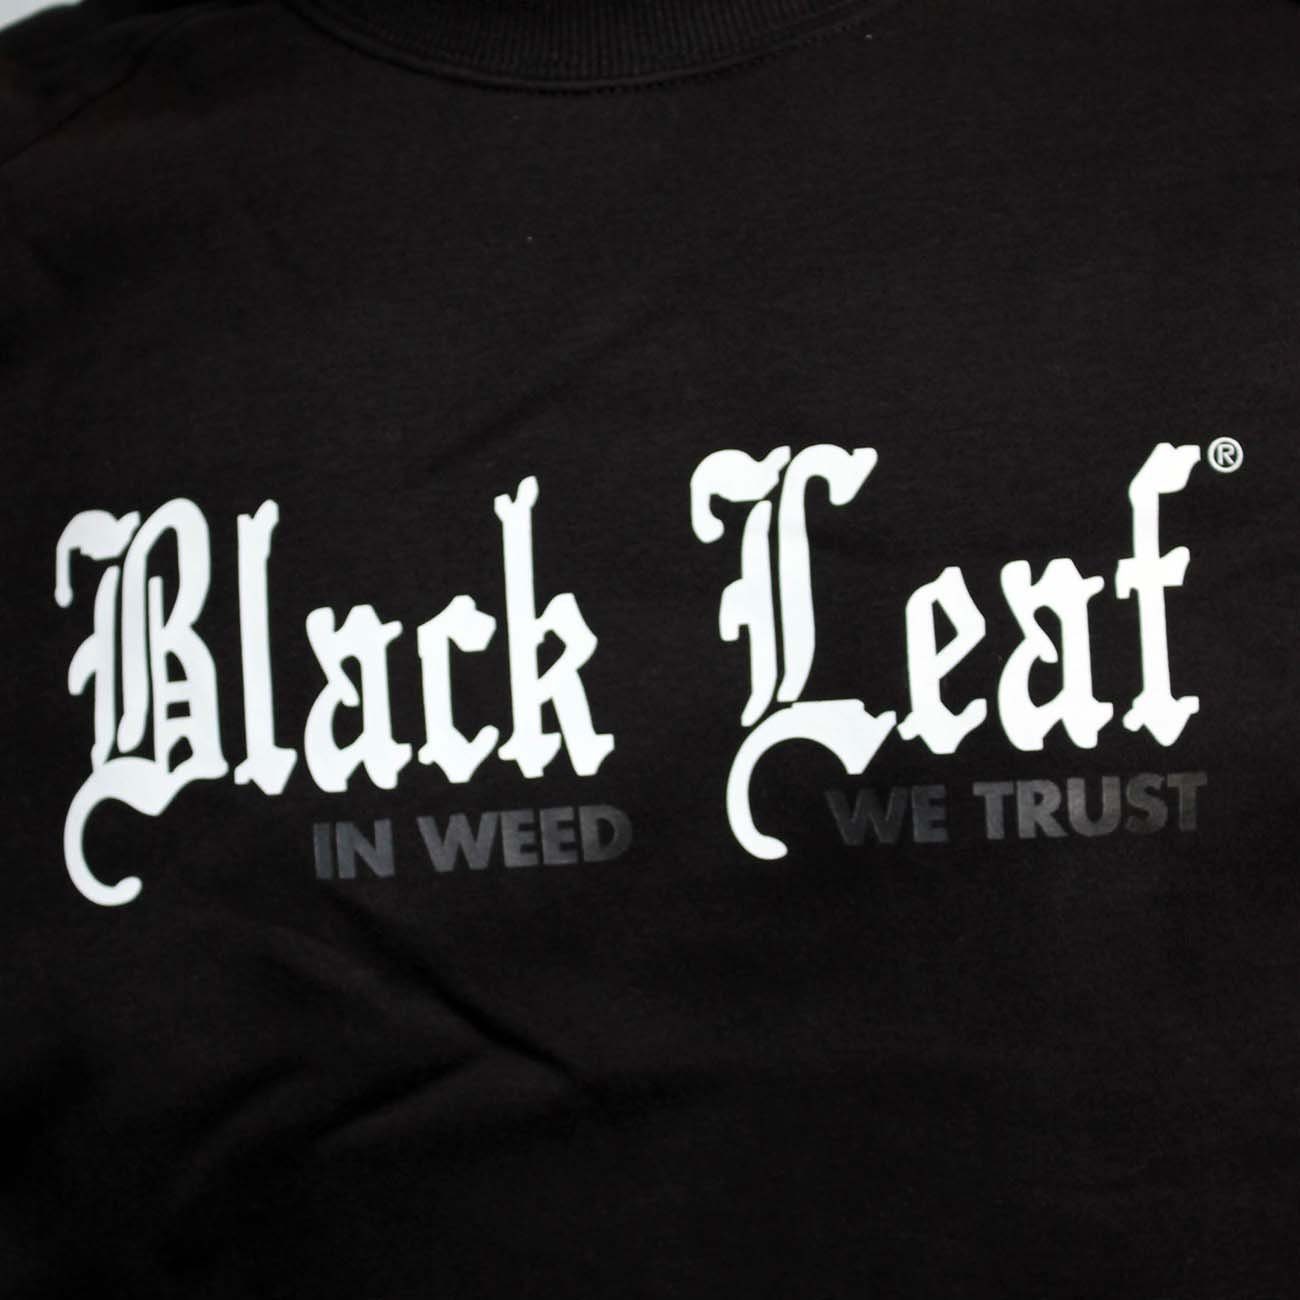 TRUST IN Atmungsaktiv, Leaf®-Logo, Leaf Sweatshirt Original Unisex WE Black WEED Black